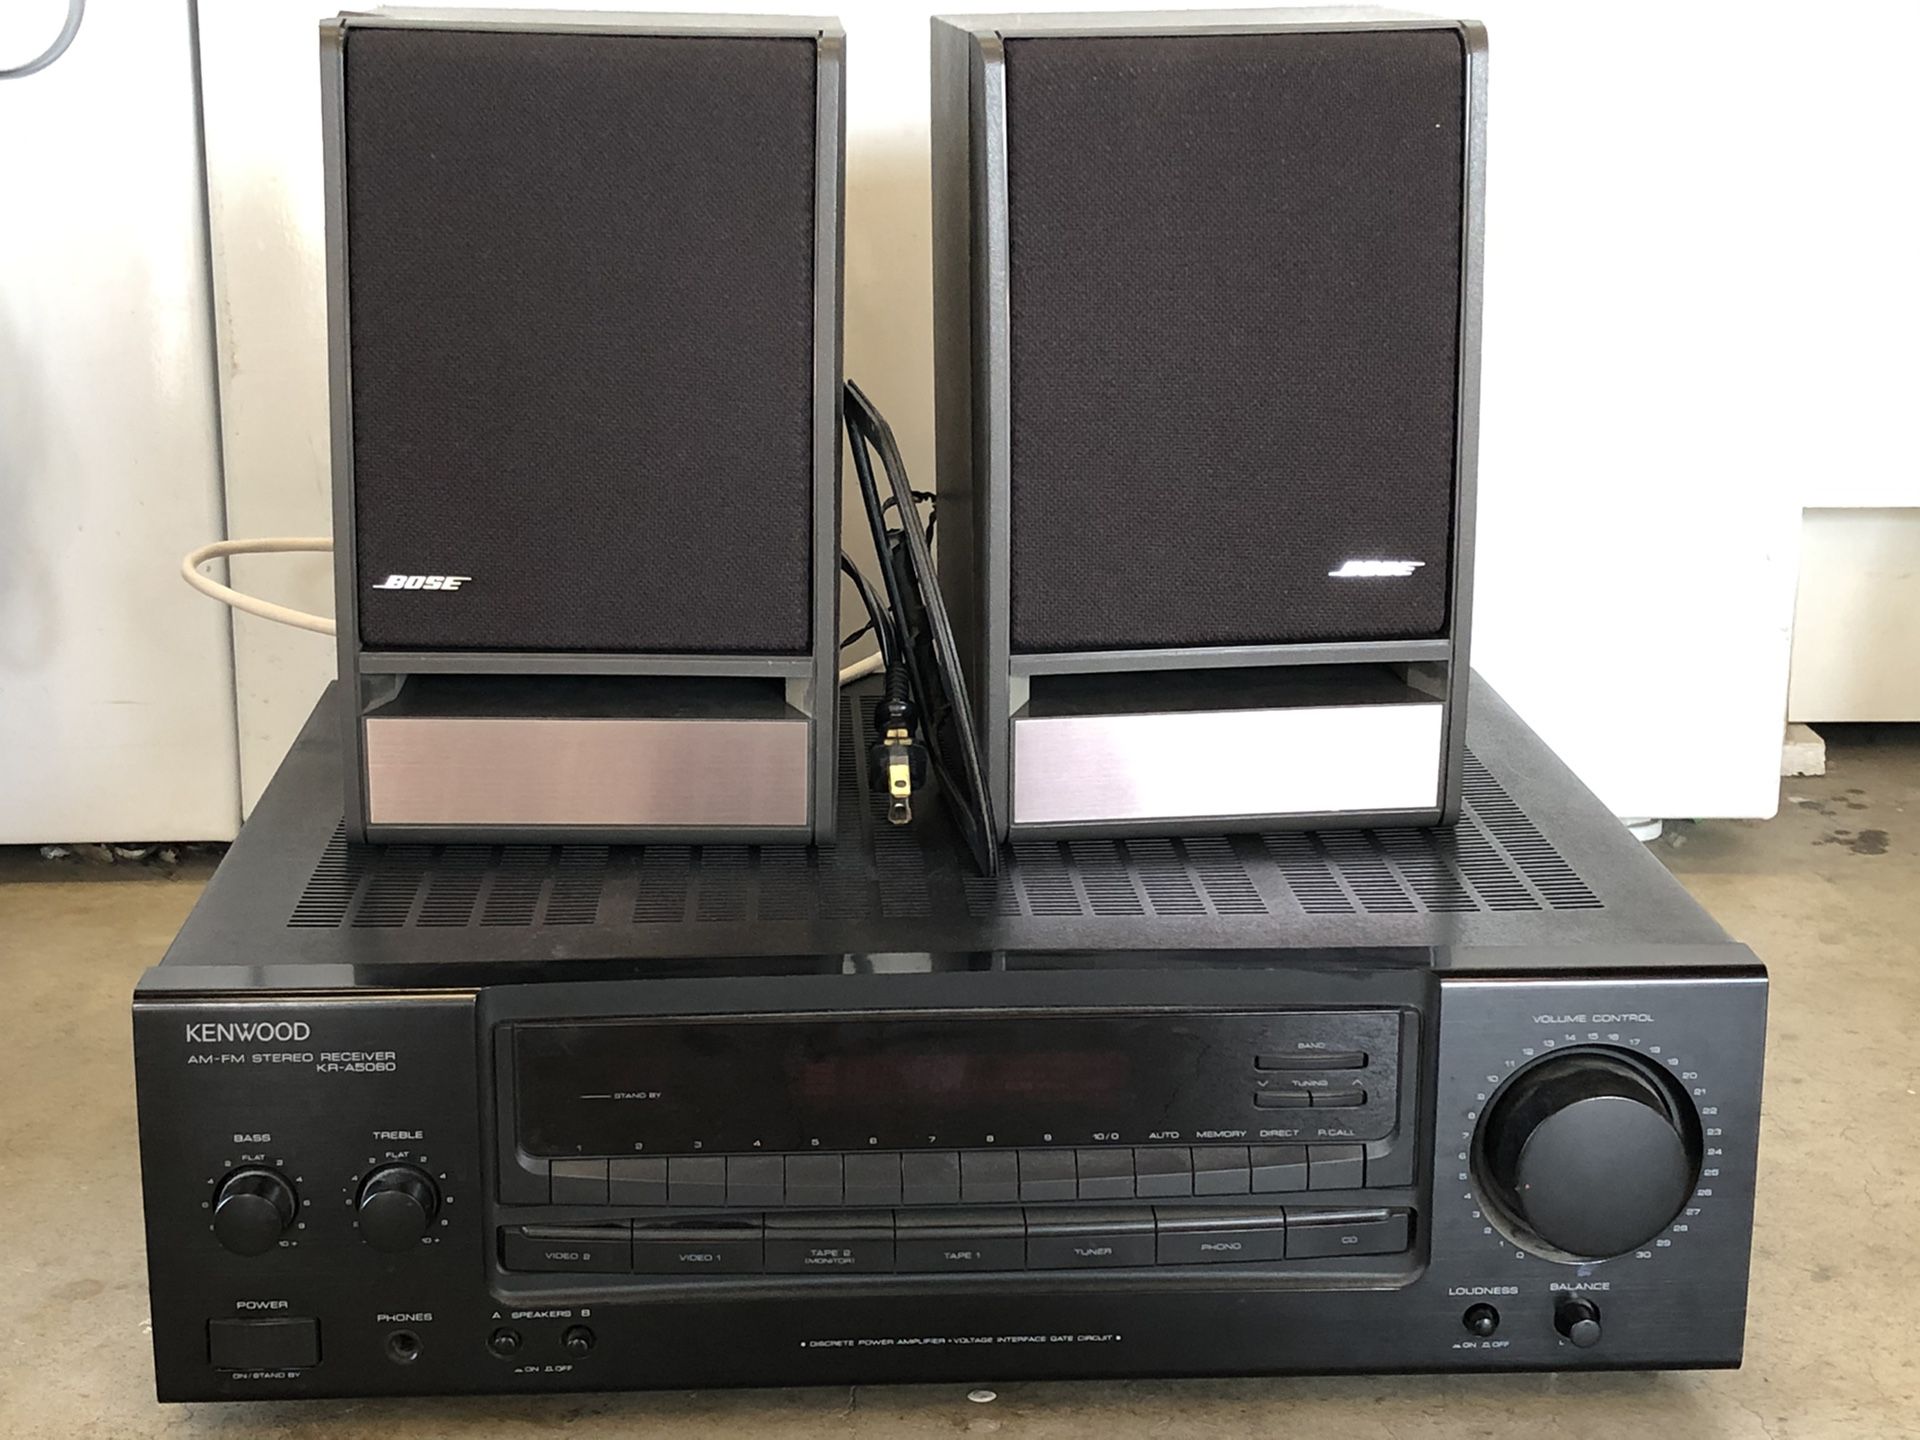 Kenwood Audio Stereo and Bose Bookshelf Speakers